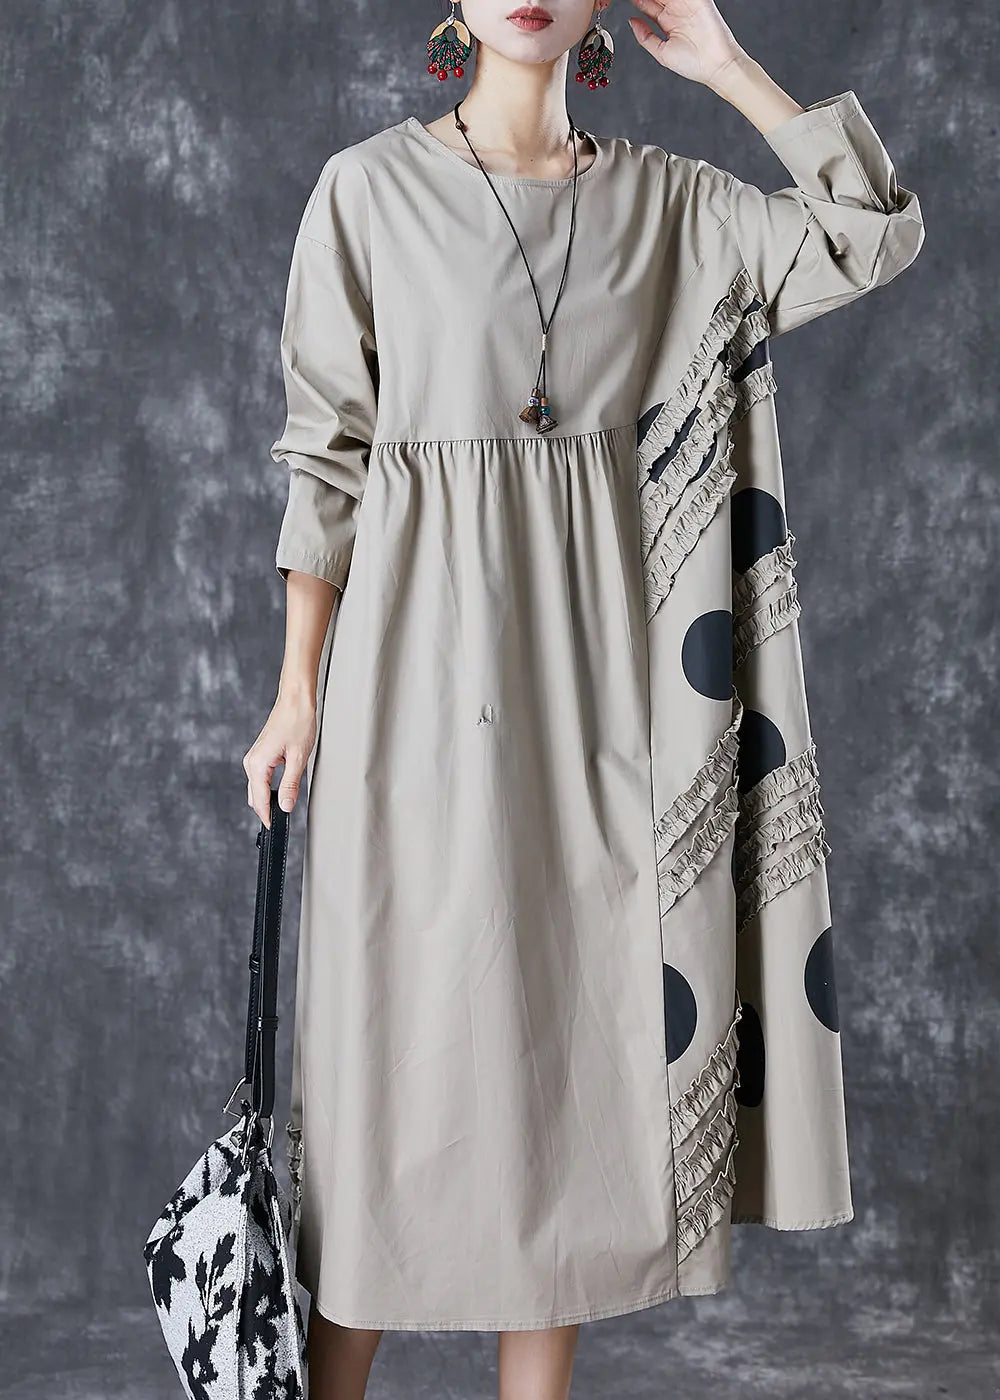 Grey Patchwork Cotton Holiday Dress Ruffled Spring Ada Fashion